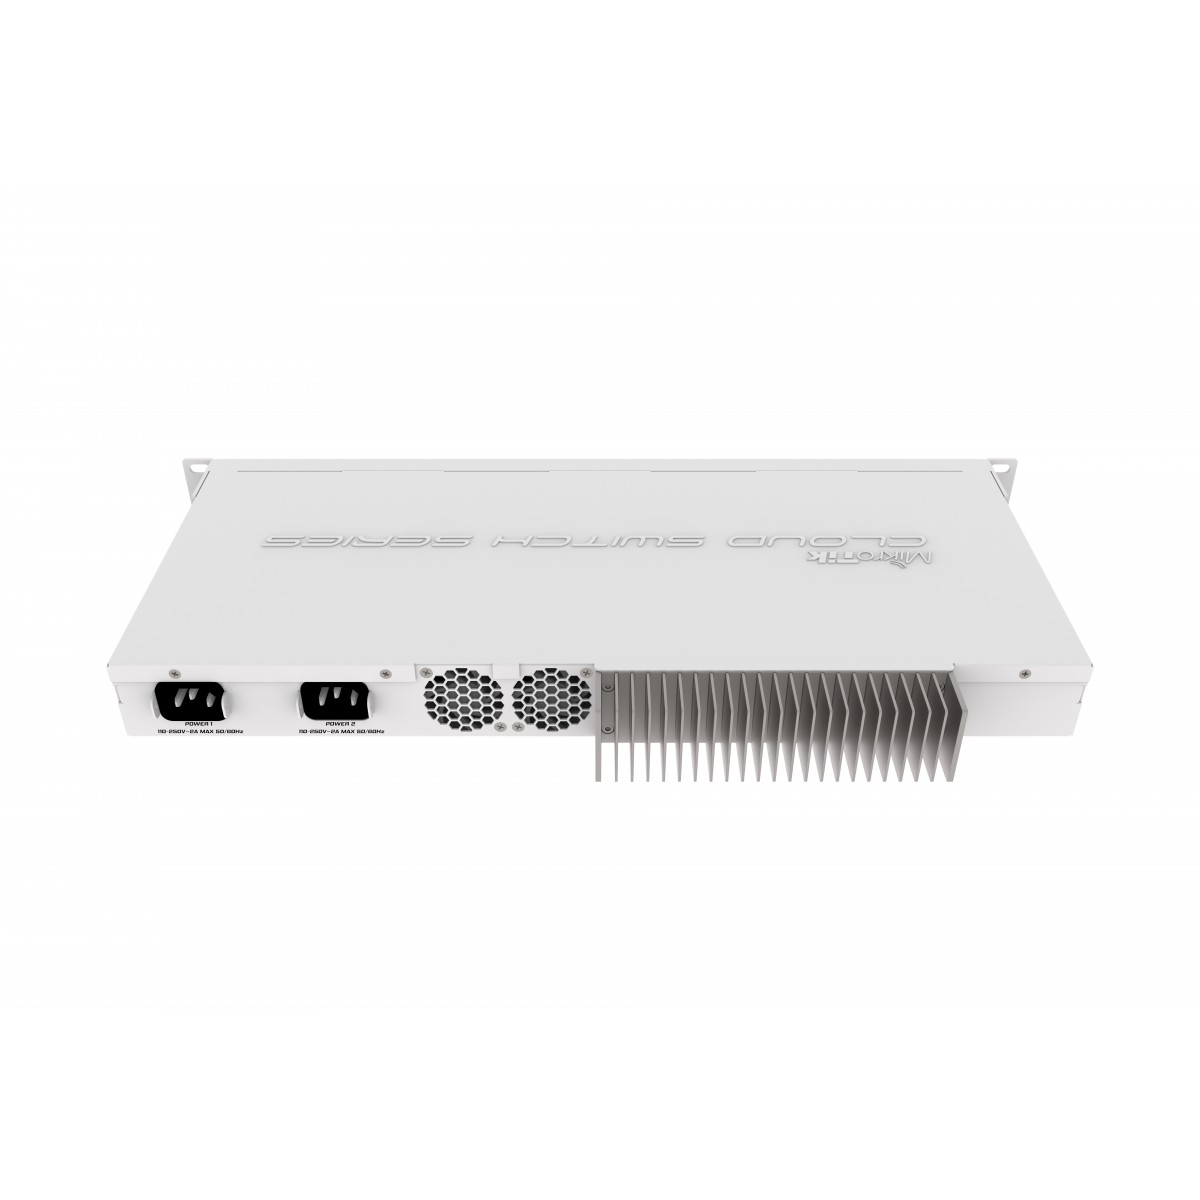 MikroTik Cloud Router Switch CRS317-1G-16S+RM, dual-core 800MHz CPU, 1GB, 1xGLAN, 16xSFP+ slot, vč. L6